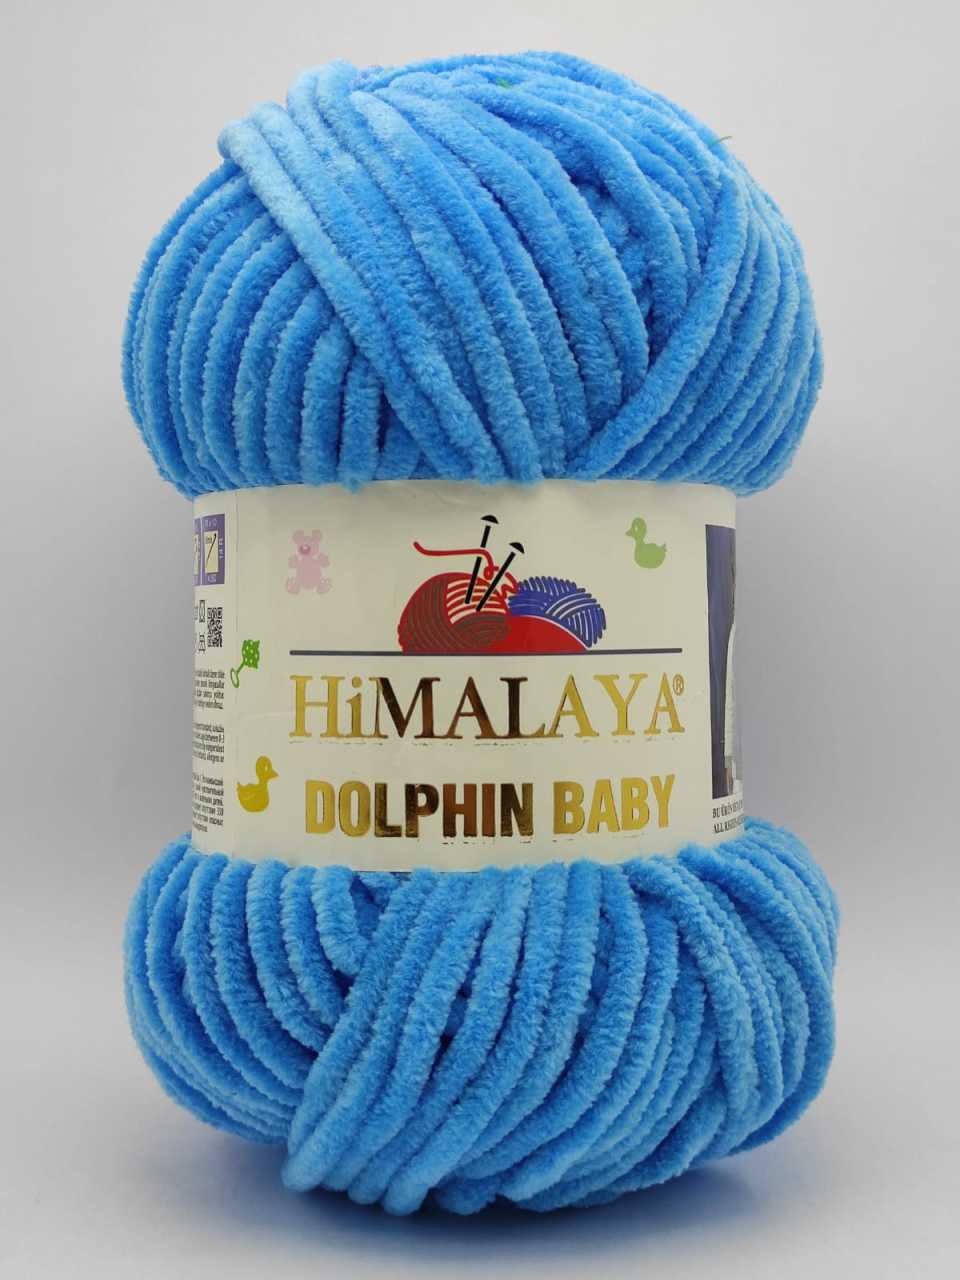 Himalaya Dolphin Baby 80326